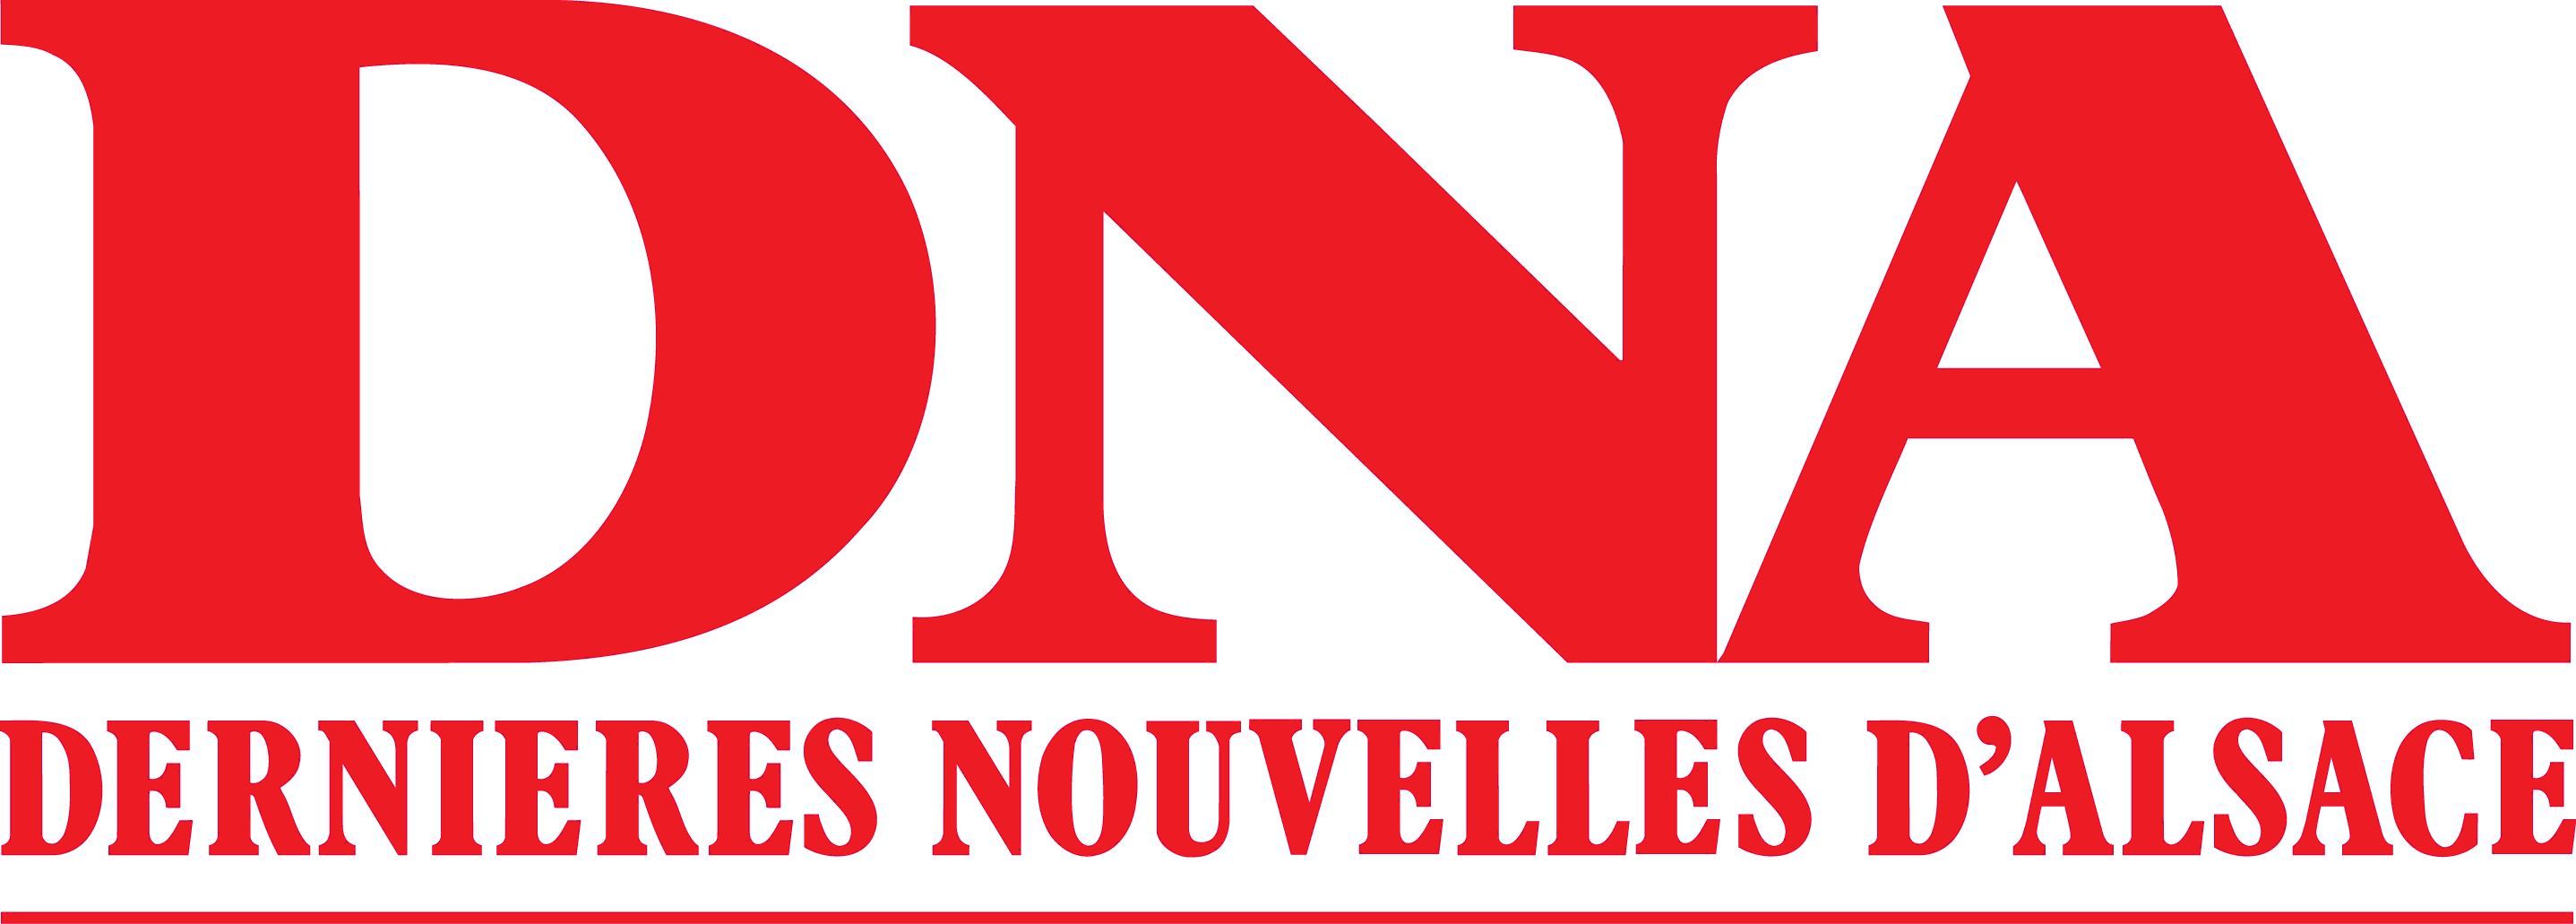 Logo du journal DNA